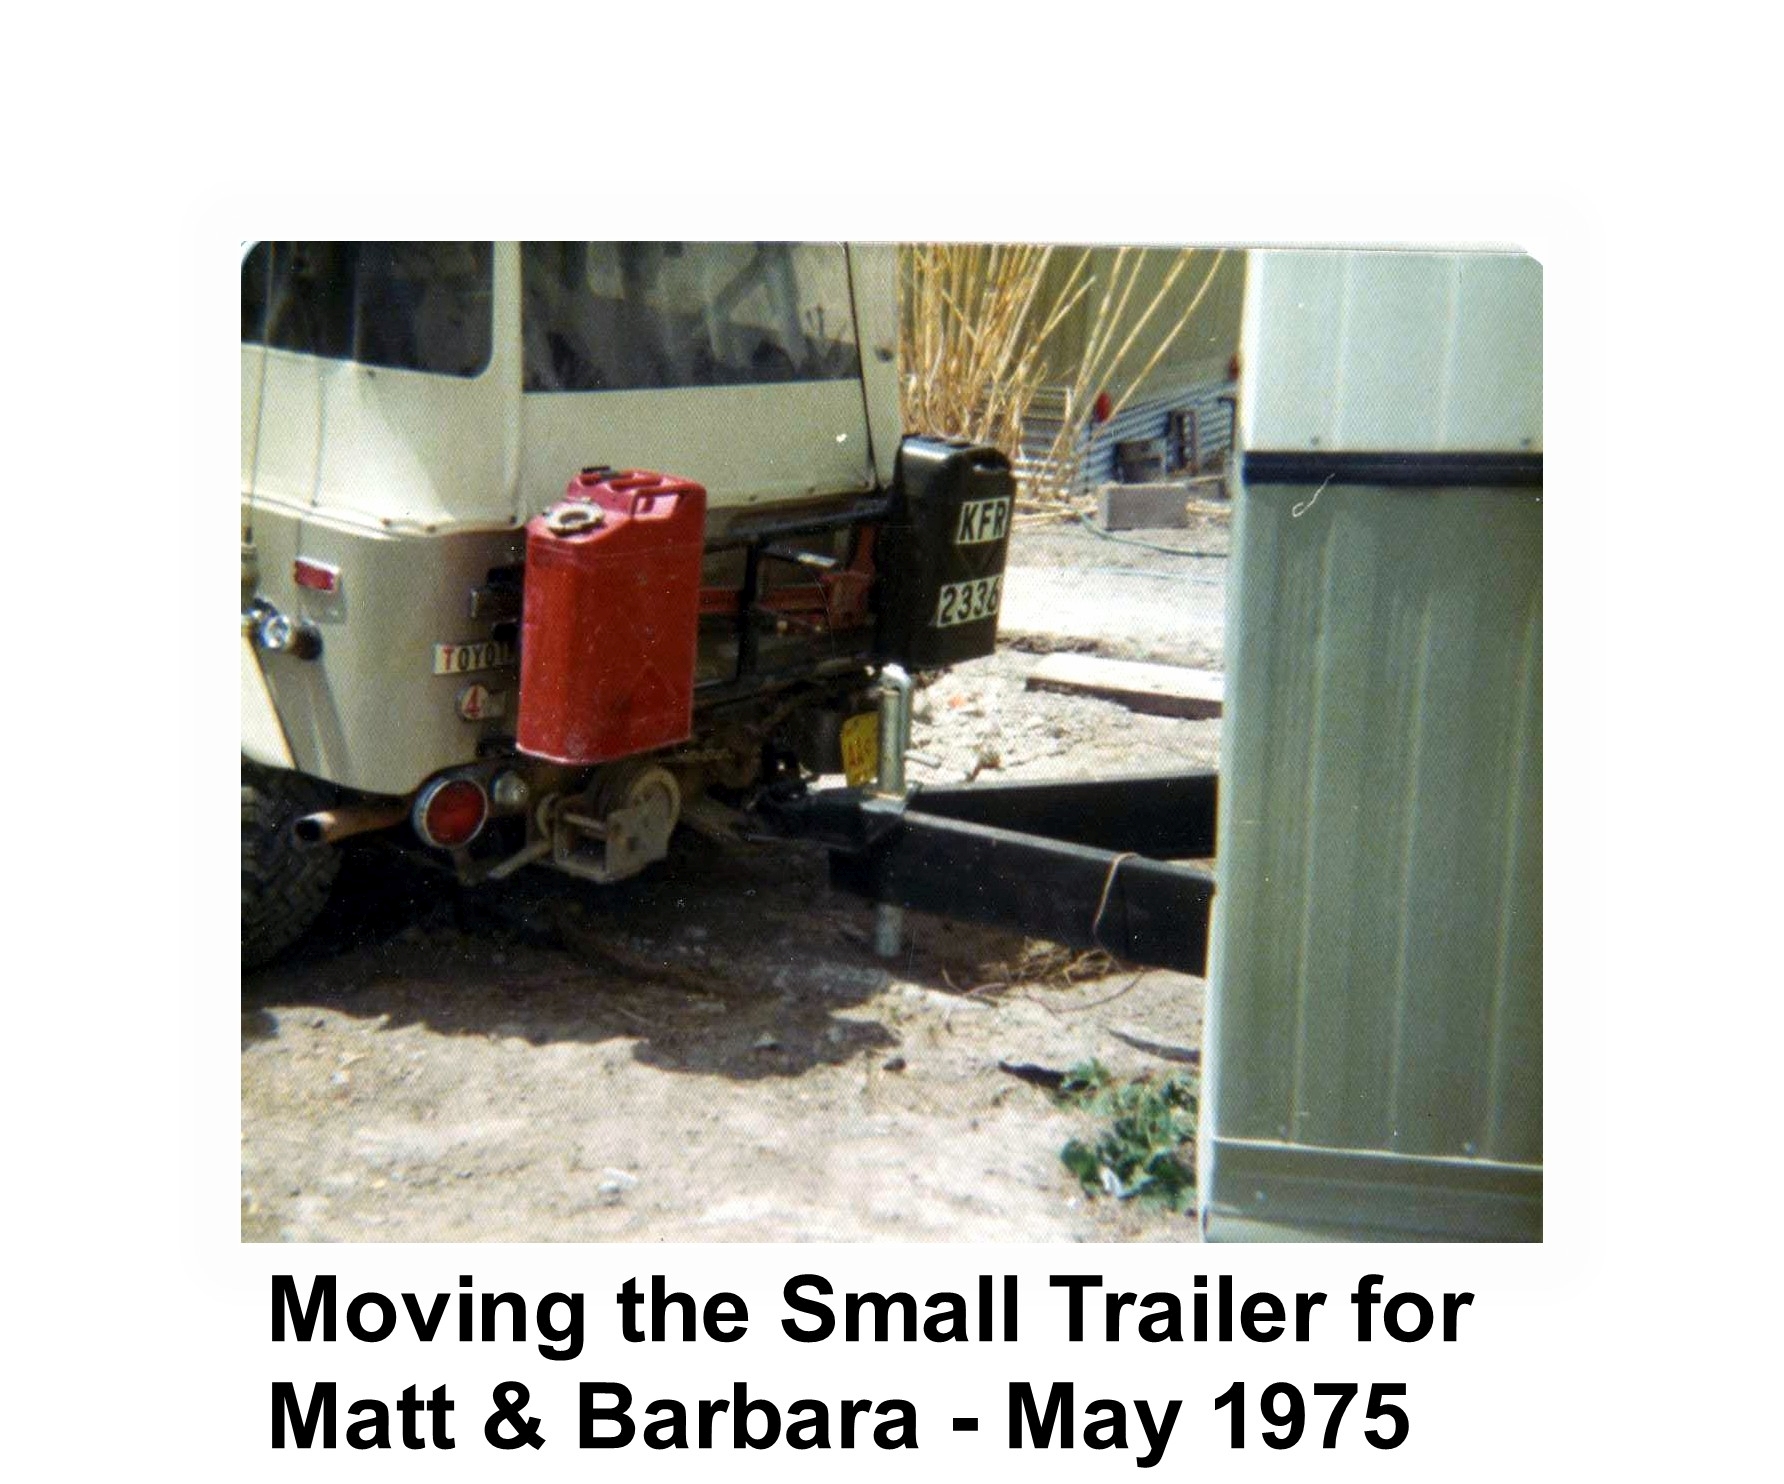 043 1975 Moving the Small Trailer for Matt & Barbara - May 1975-Small.jpg